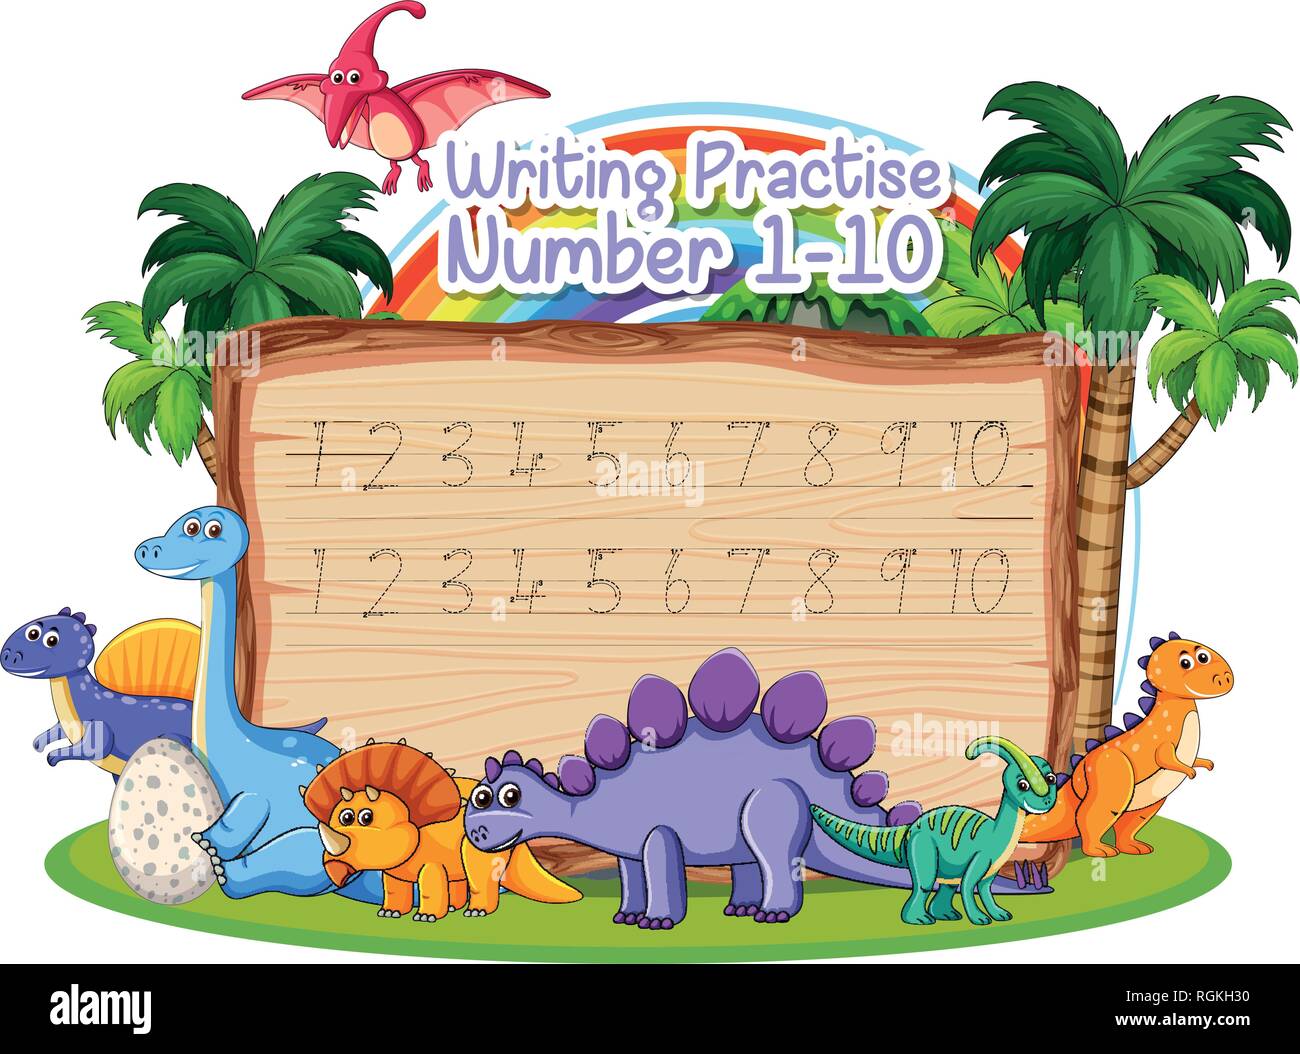 Writing number practice dinosaur theme illustration Stock Vector